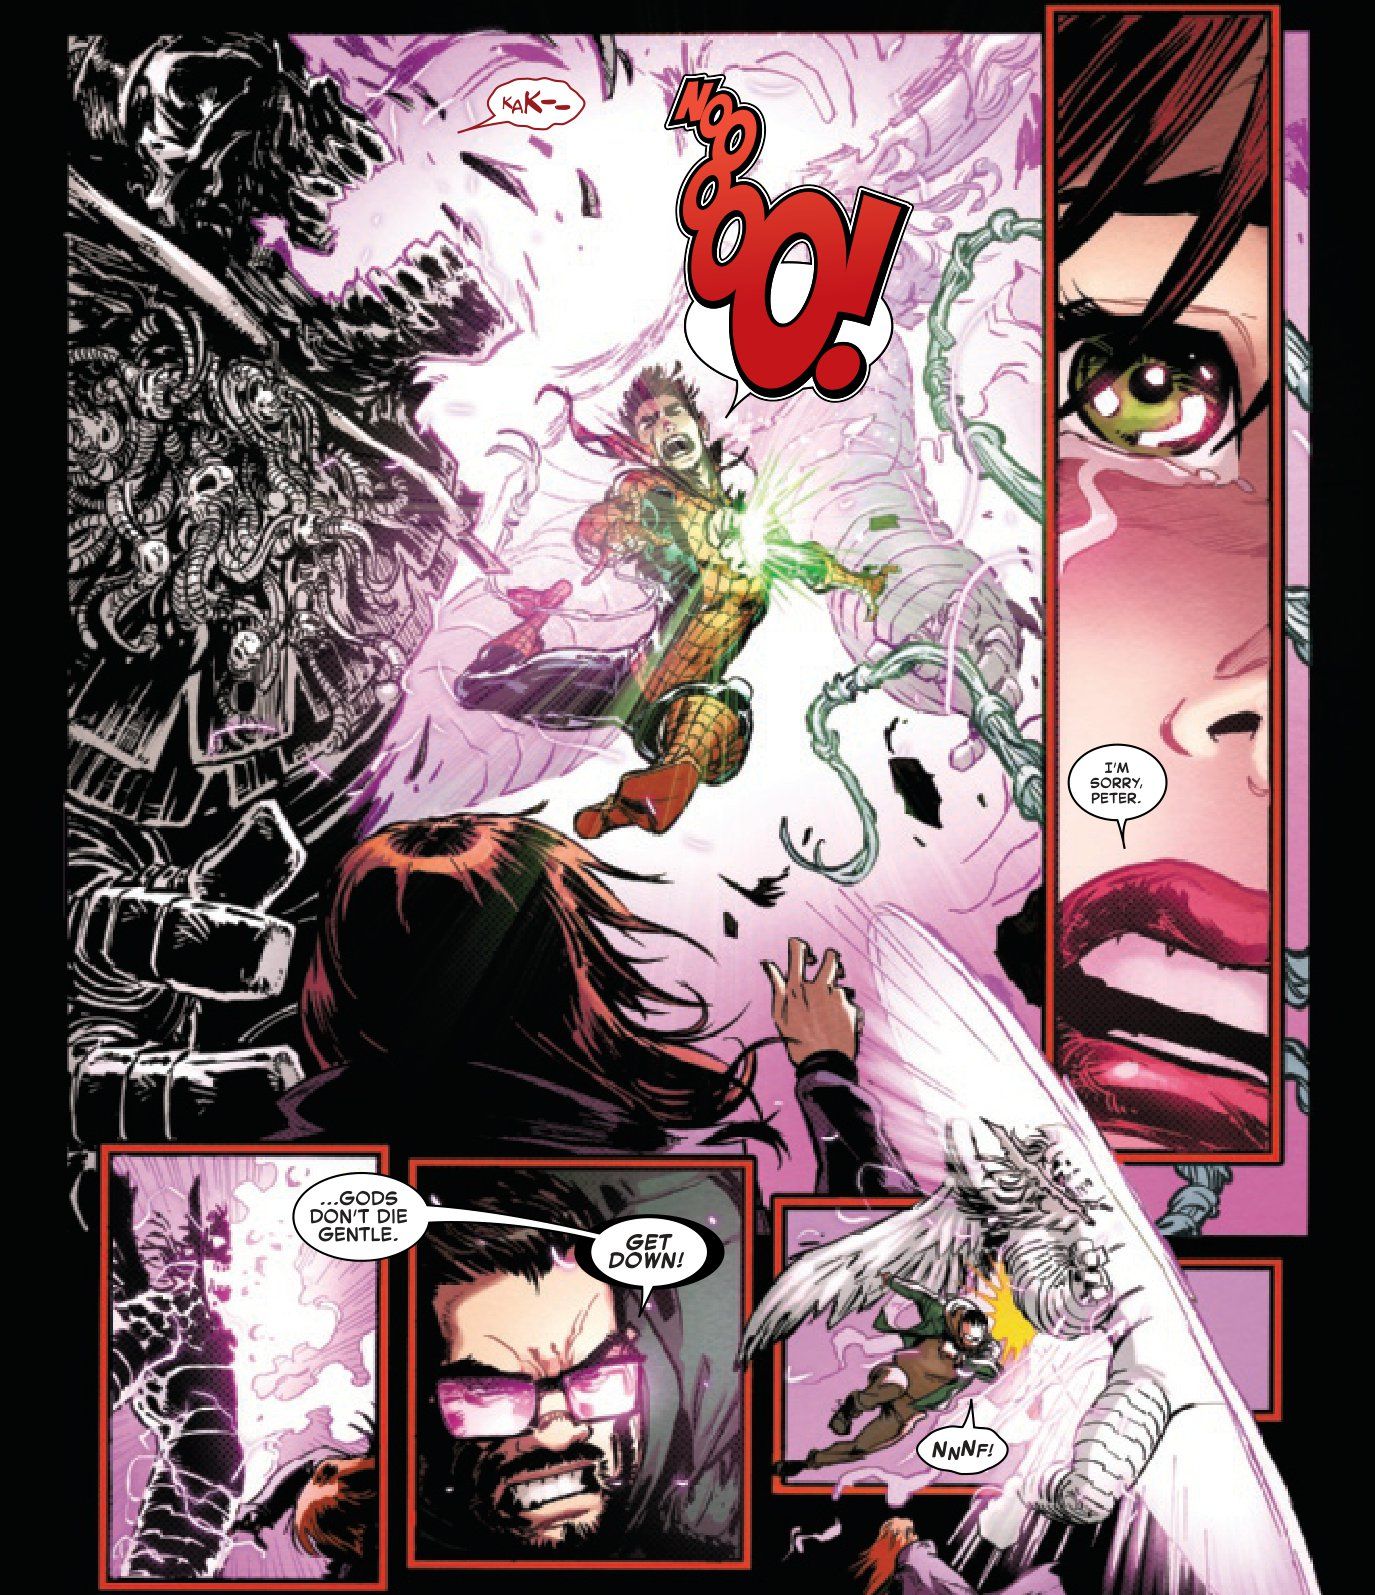 Mary Jane sends Peter back home as Wayep dies in Amazing Spider-Man #25